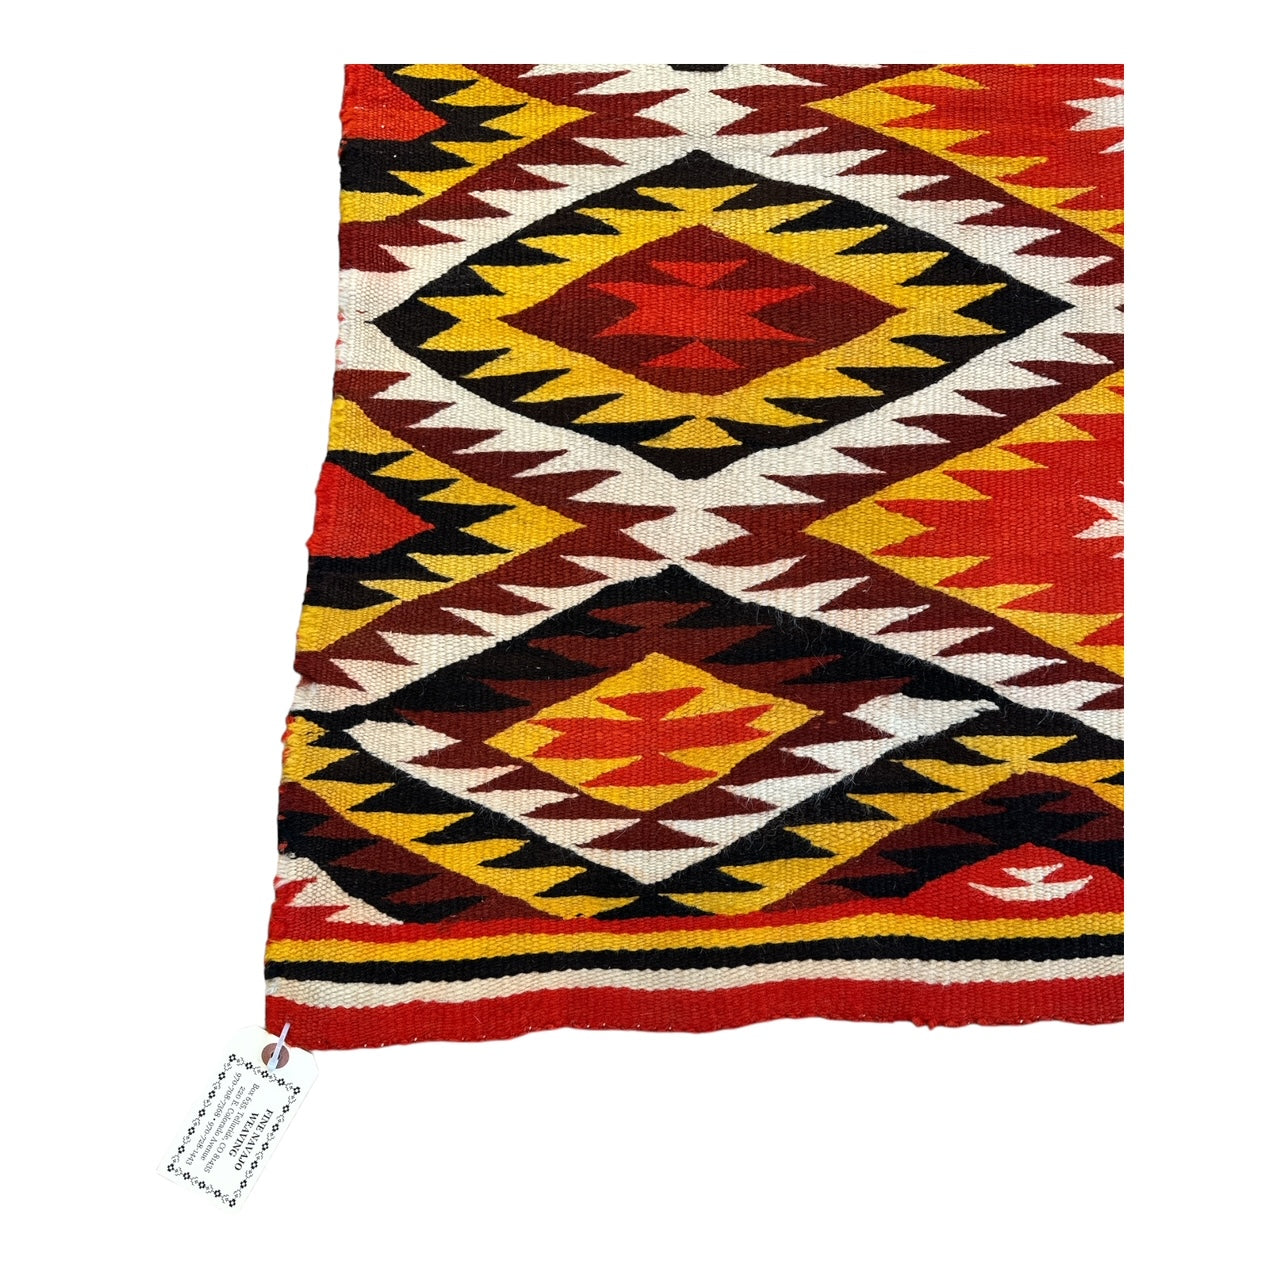 Antique Transitional Navajo Blanket, navajo rug for sale, authentic navajo weaving for sale, telluride furnishings, telluride gallery